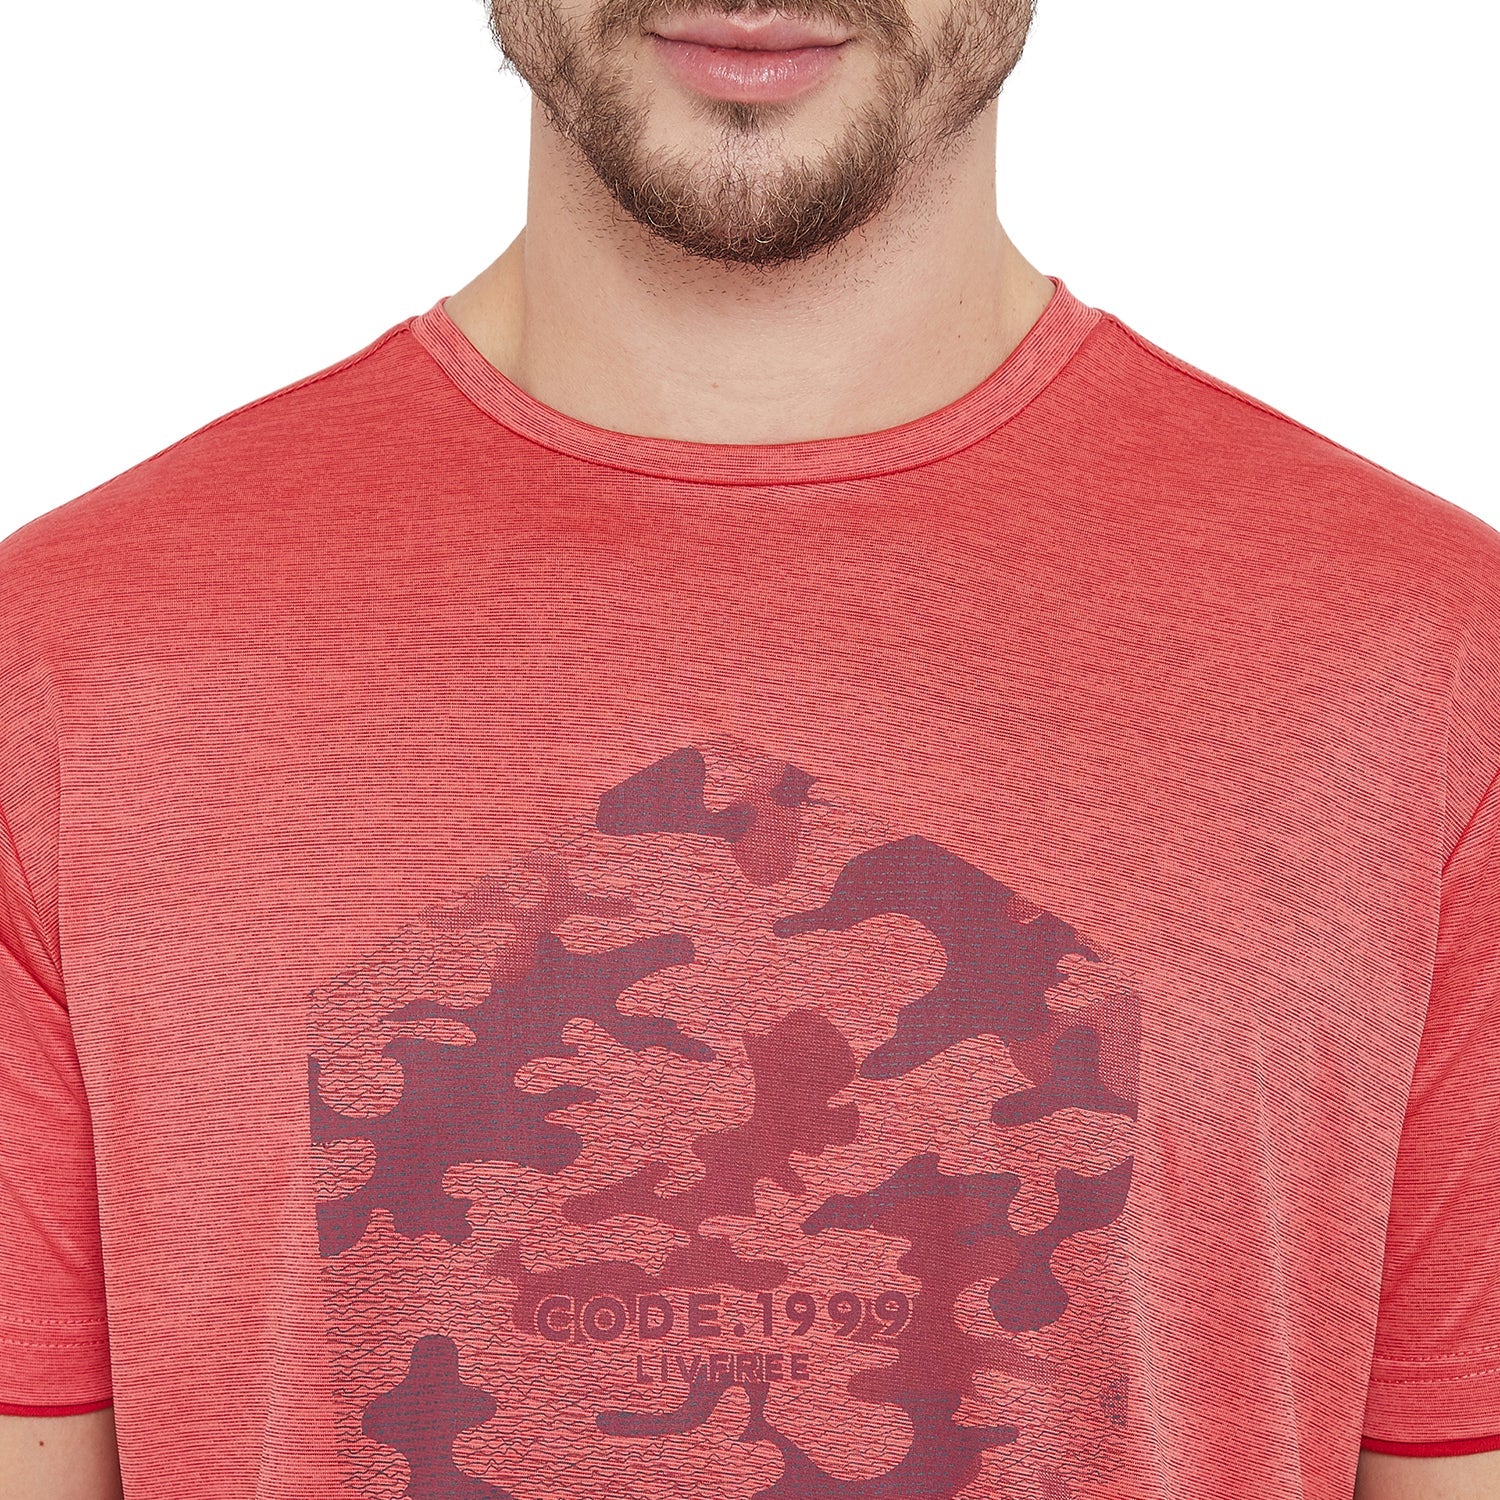 LIVFREE  Round Neck Men's T-Shirt in Printed Pattern Half Sleeve- Maroon Mix